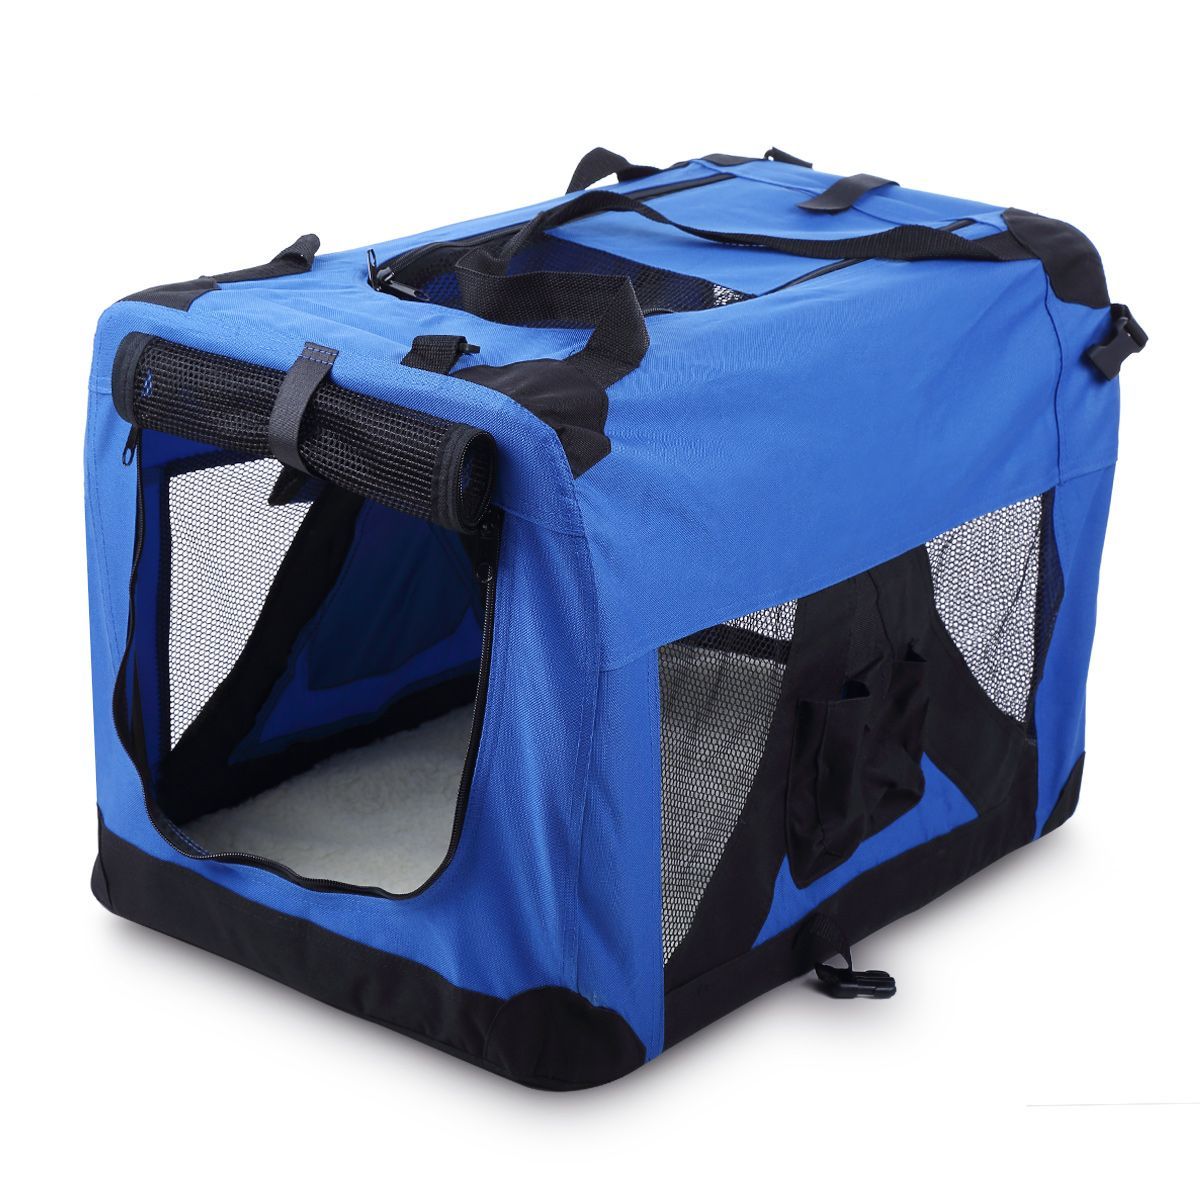 Portable Pet Soft Crate Carrier 70x52cm - Large, Waterproof, Blue ...